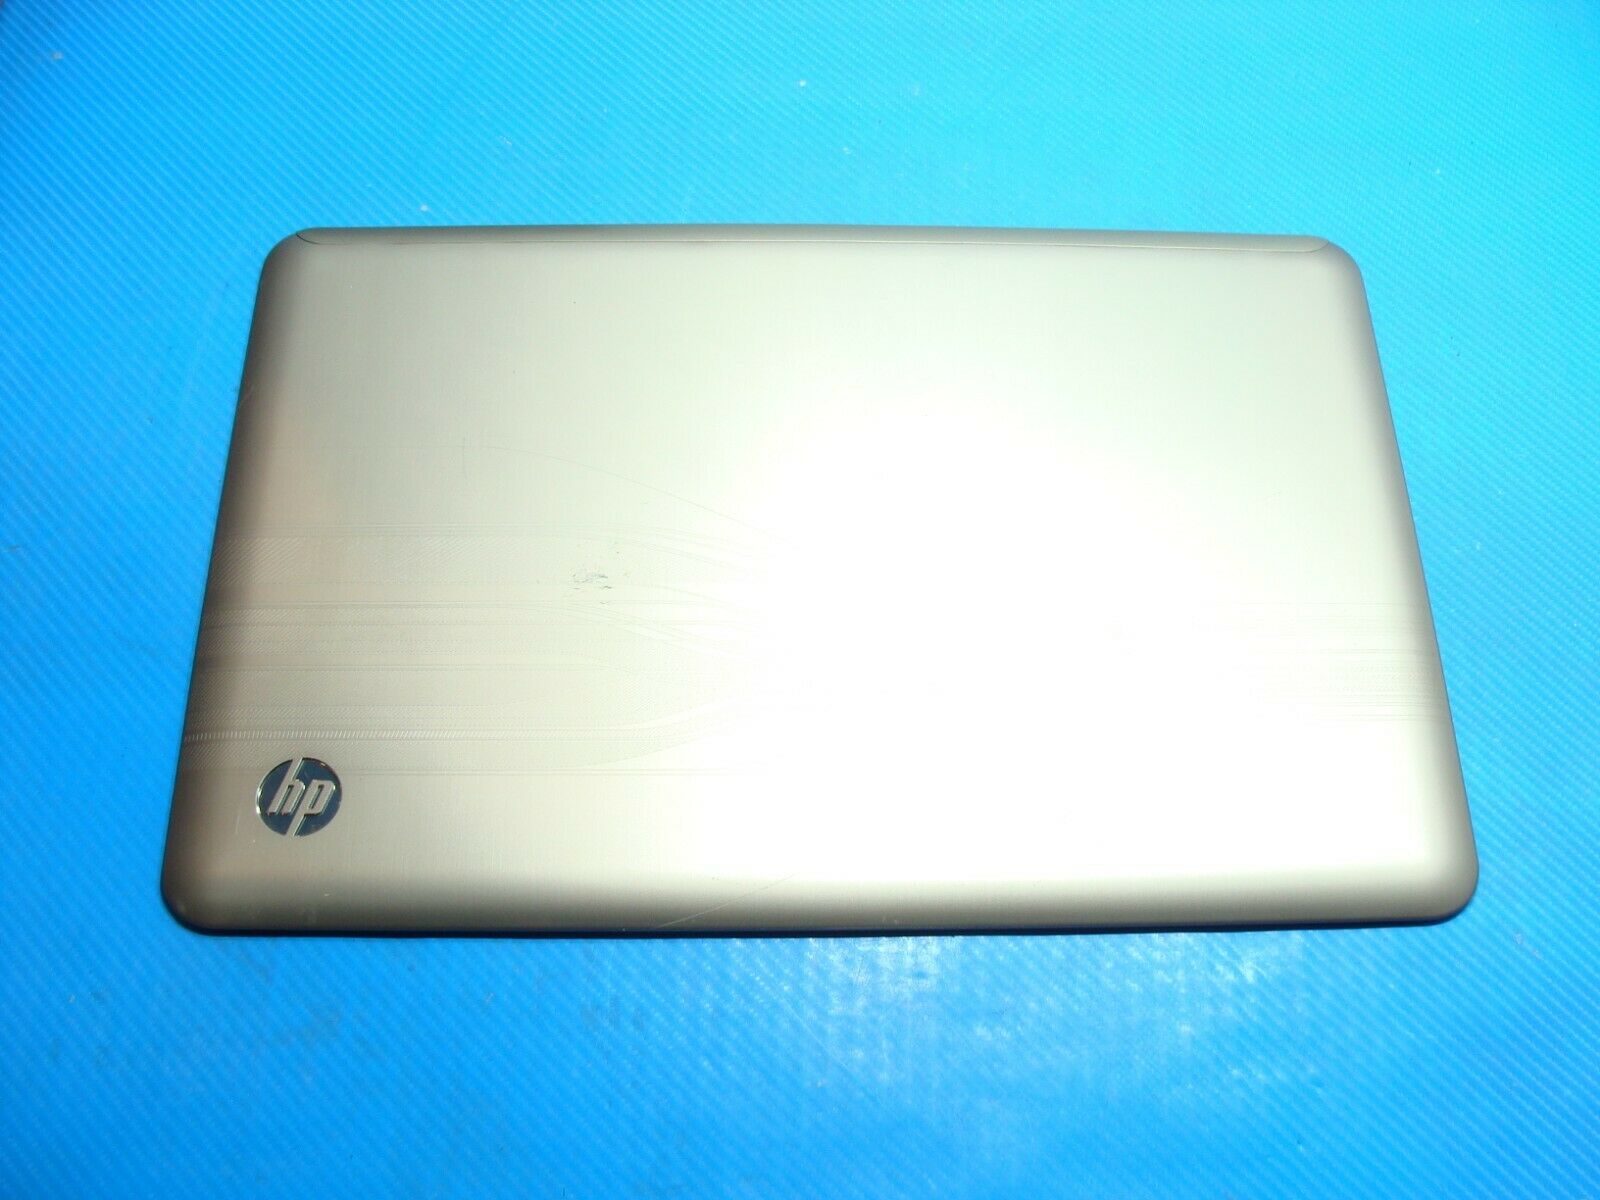 HP Pavillion dv7t-5000 17.3